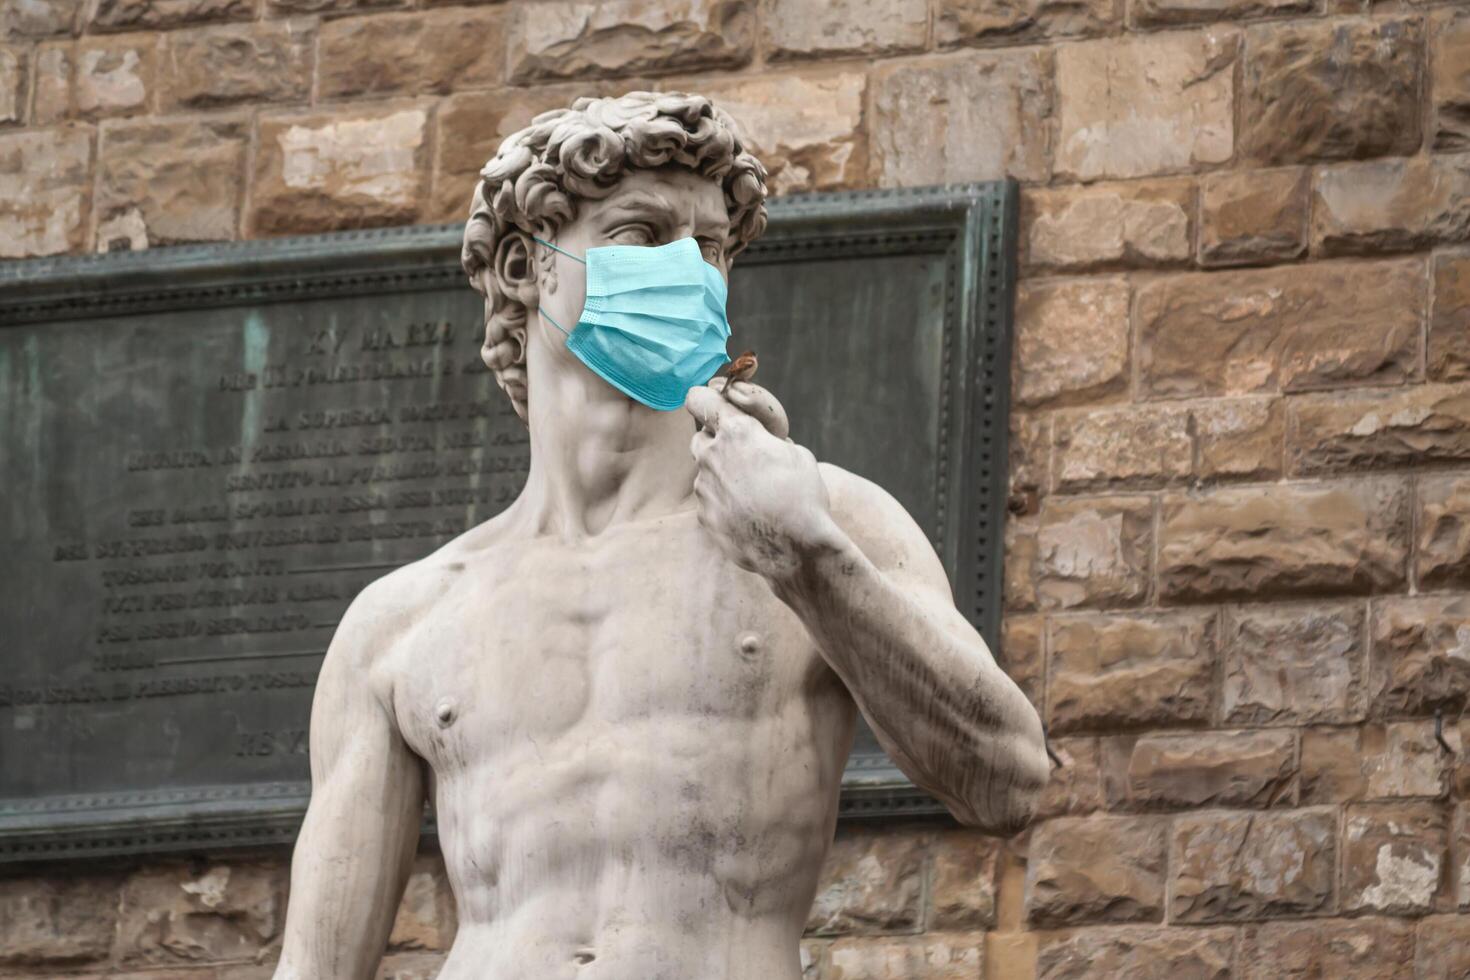 la statue de david sur la piazza della signoria en italie portant un masque médical de protection bleu photo